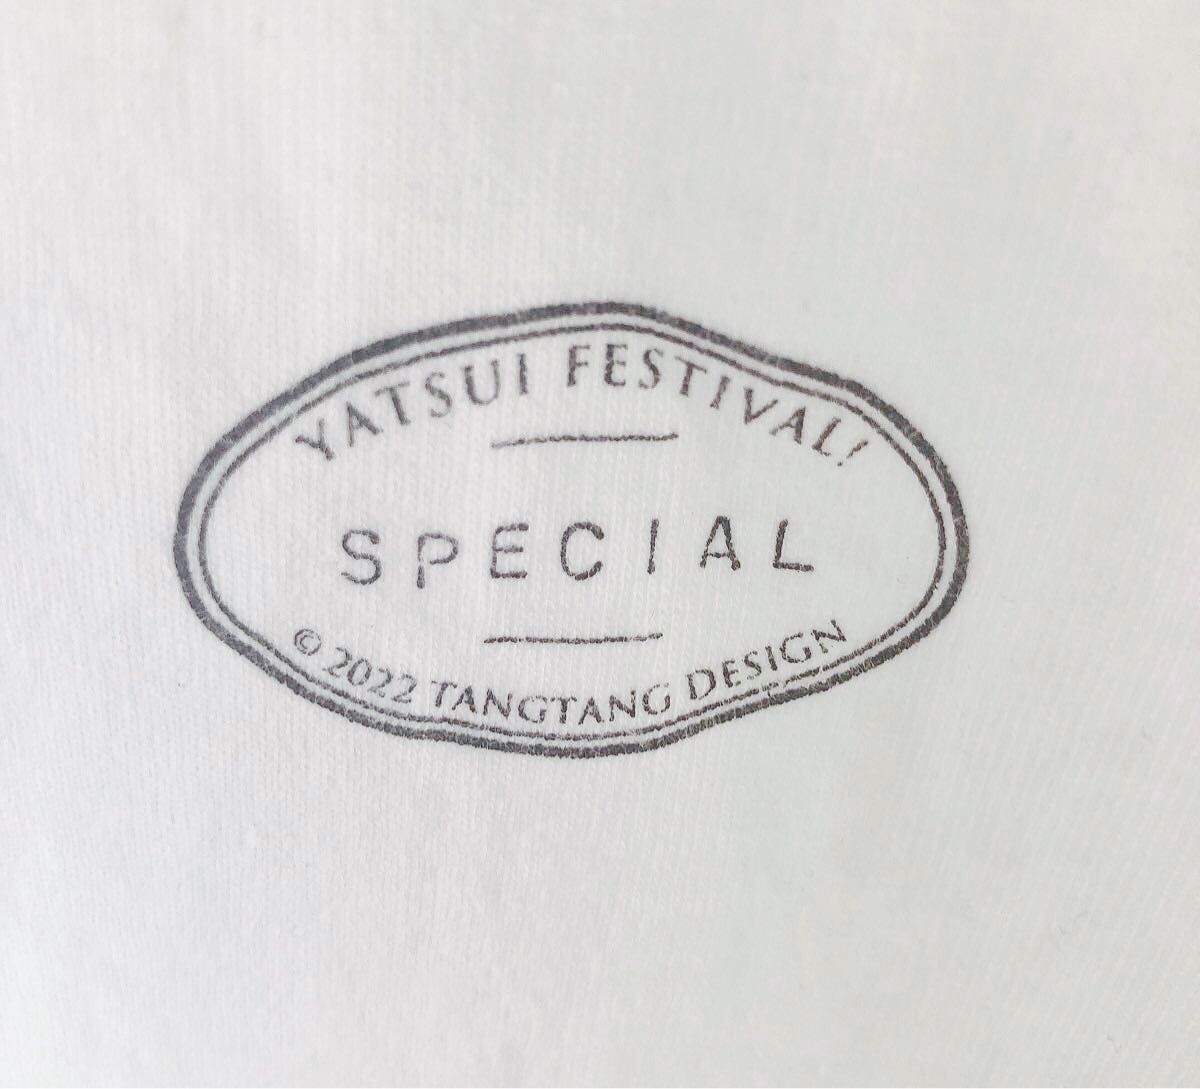 【GILDAN】YATSUI FESTIVAL FES/TangTangデザイン/ギルダン/ロゴ/Tシャツ/ホワイト/白【人気】